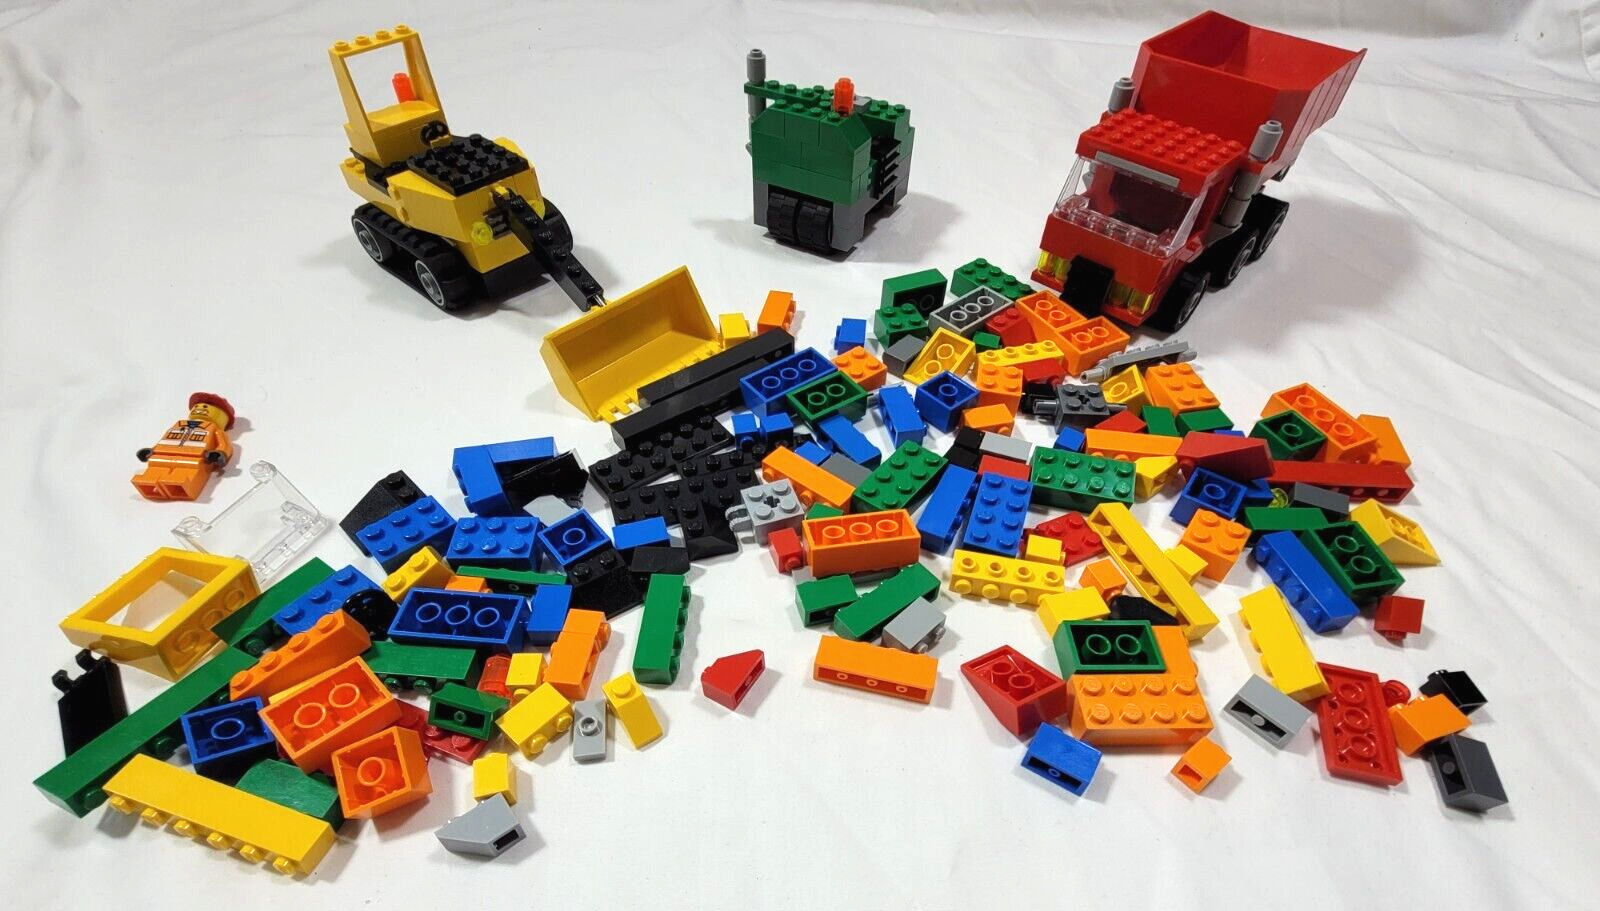 LEGO Road Construction Set (6187)  -Complete